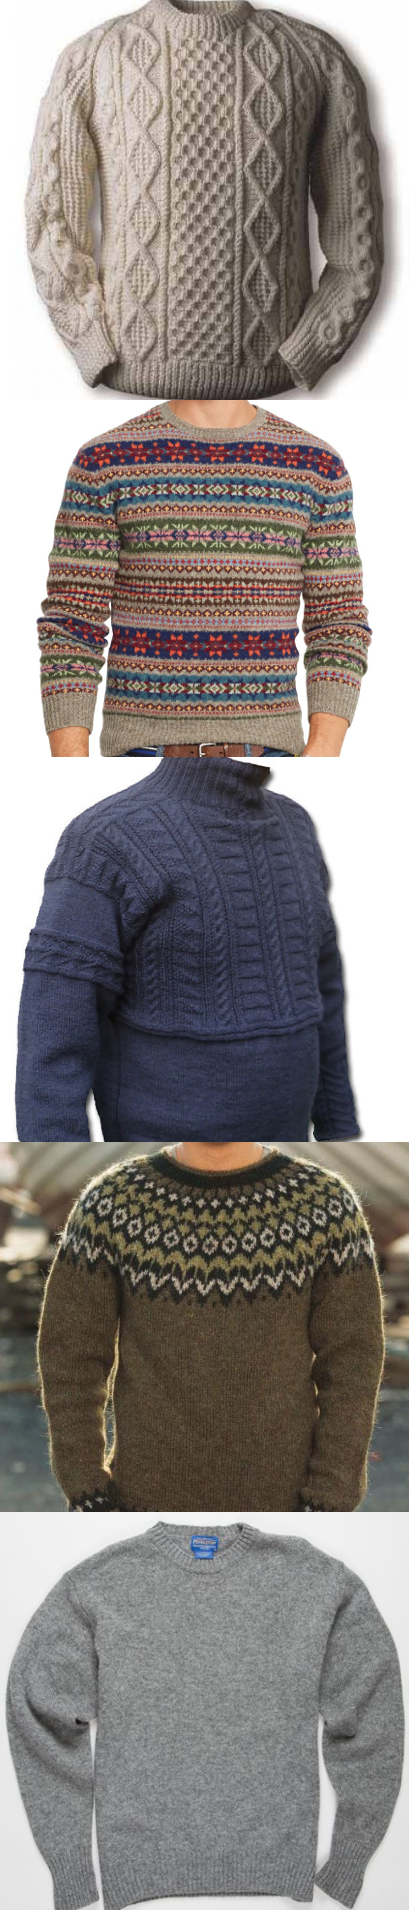 knit-sweaters